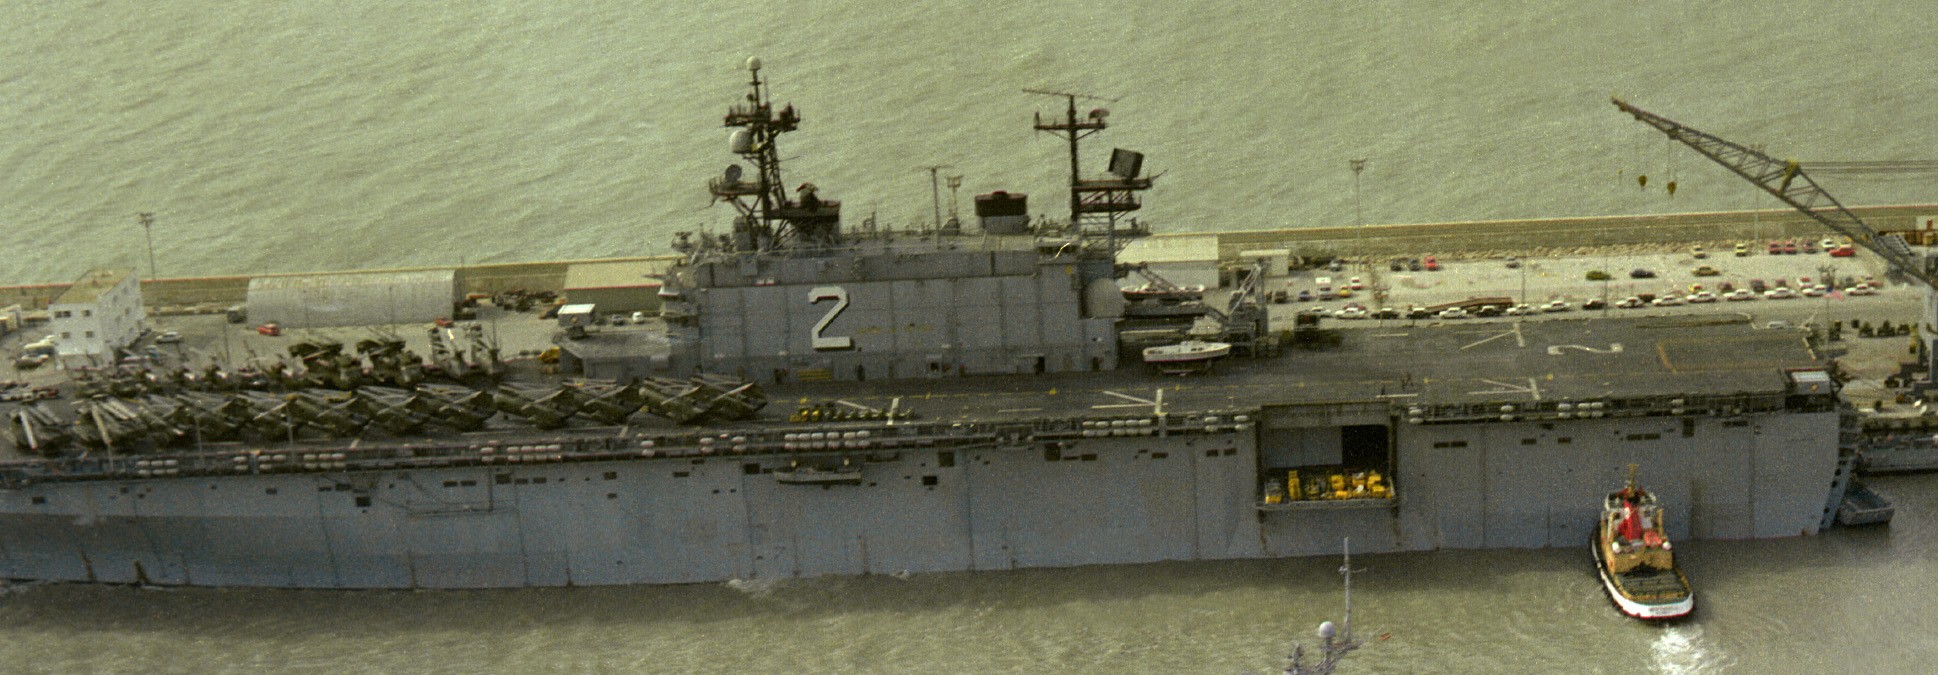 lha-2 uss saipan tarawa class amphibious assault ship us navy 32nd mau hmm-264 usmc 48 naval station rota spain